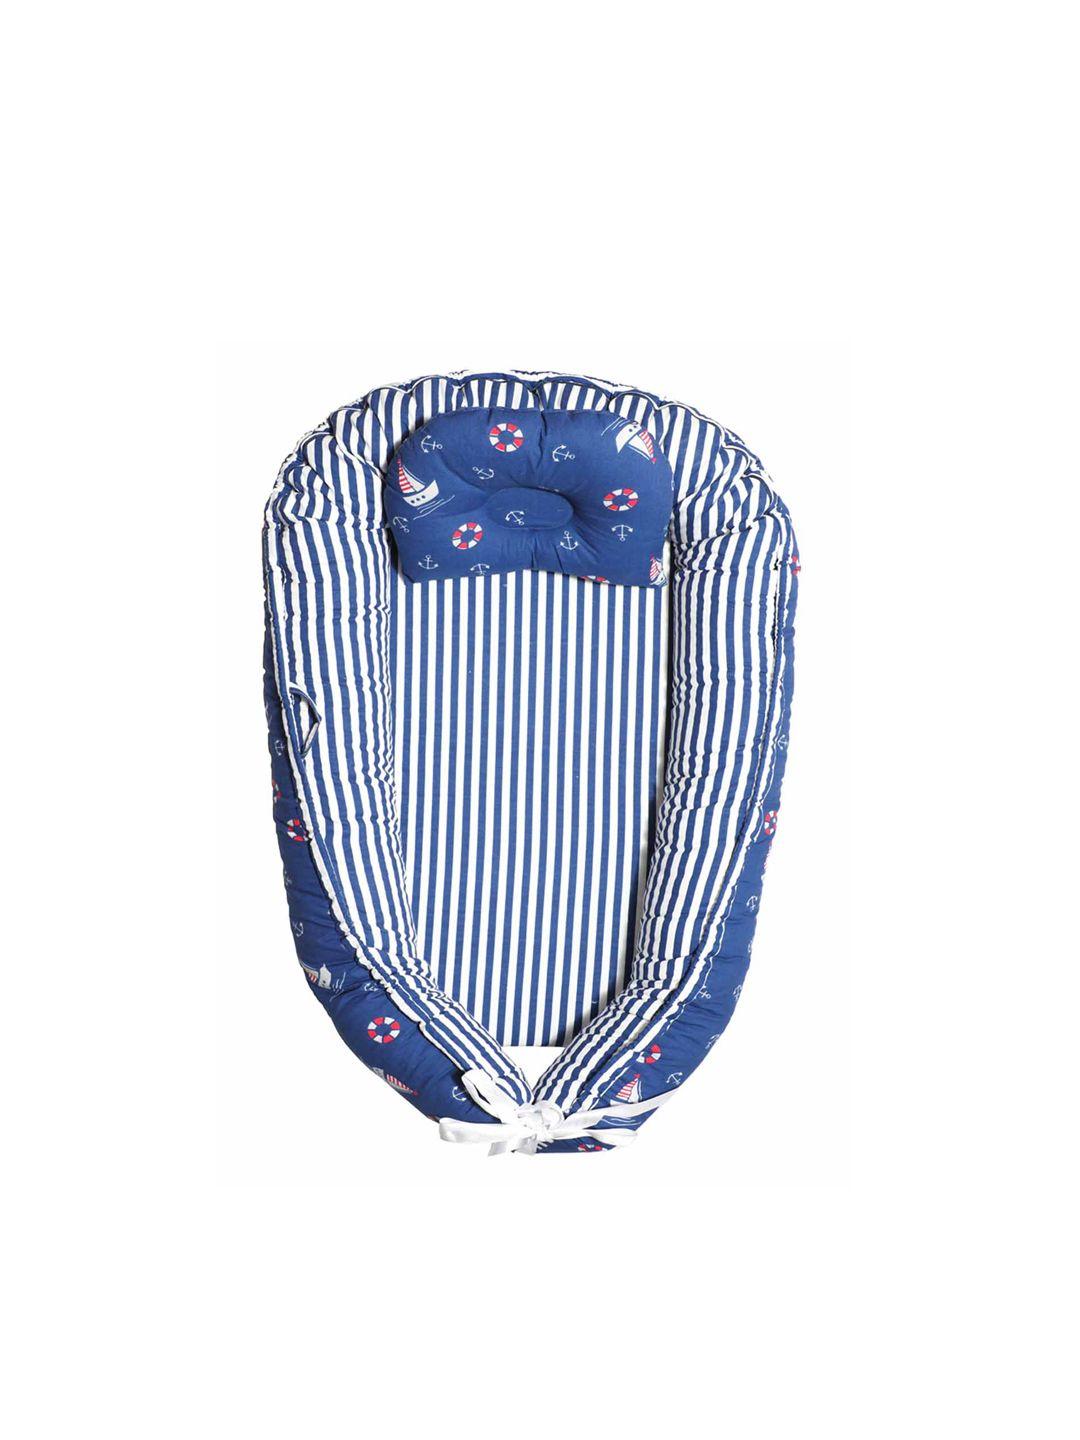 haus & kinder infants navy-blue & white printed baby sleeping bag